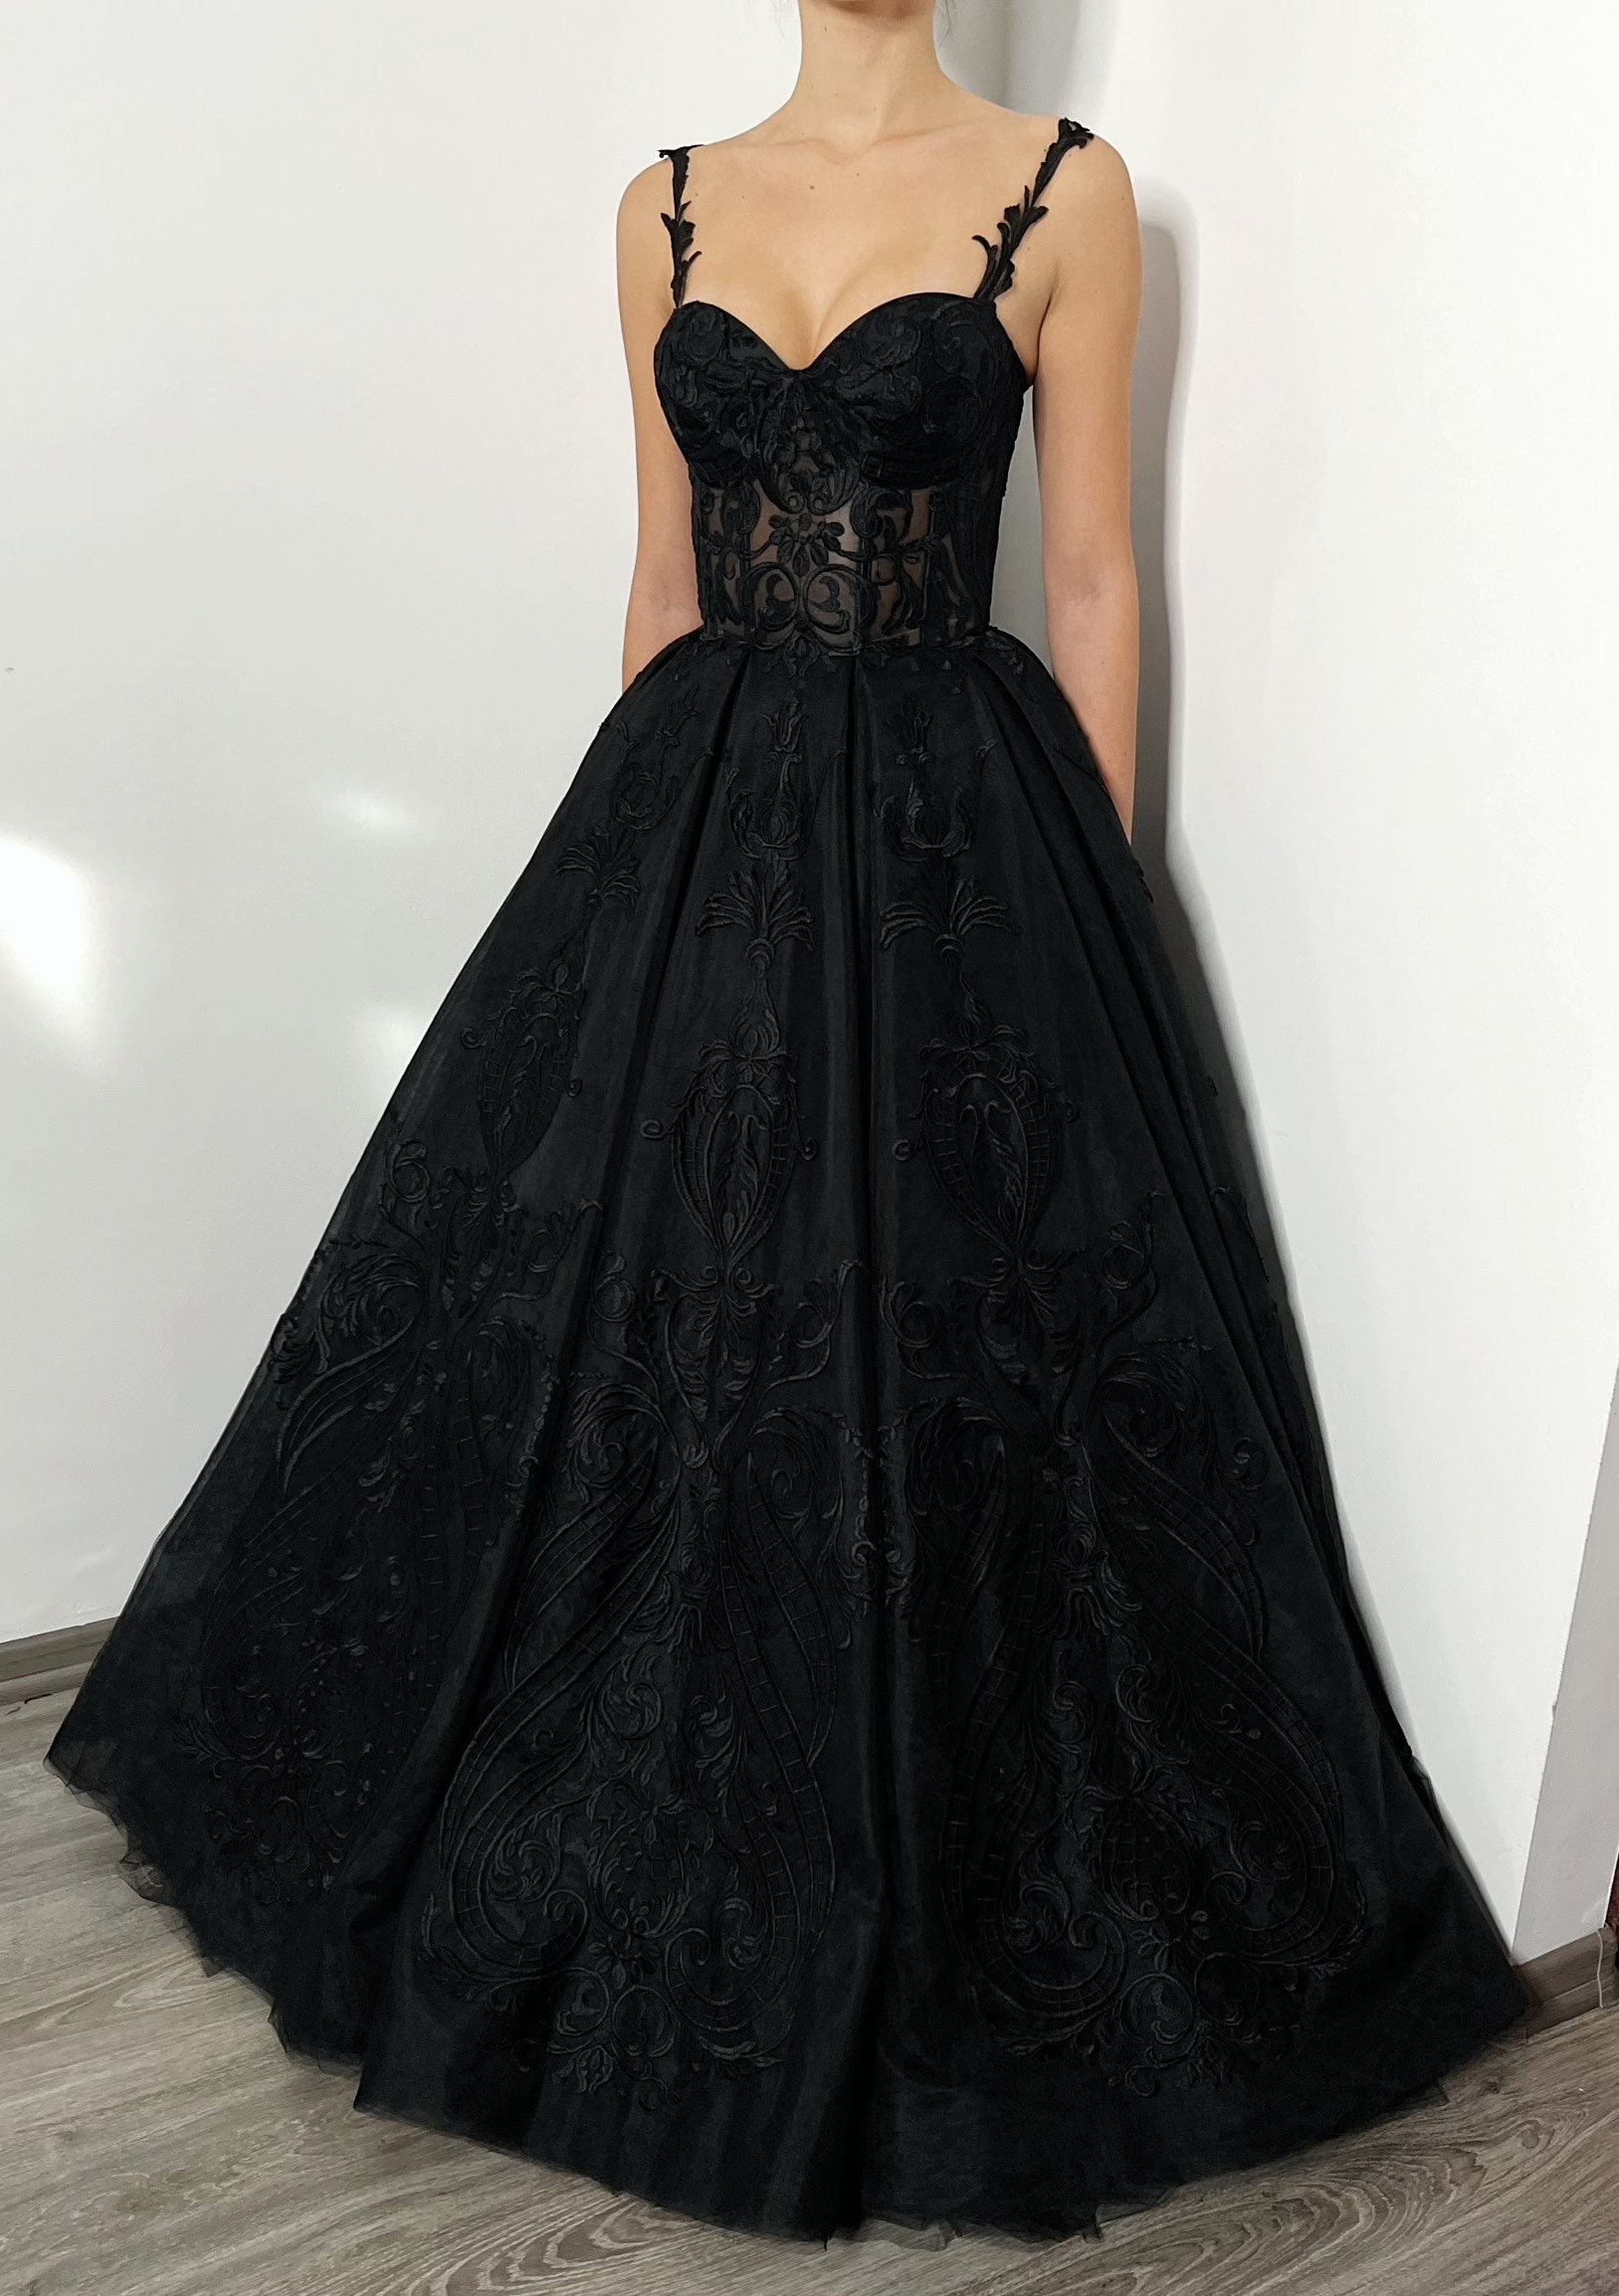 Black Gothic Lace Corset Strap Wedding Dress Long Train | Etsy